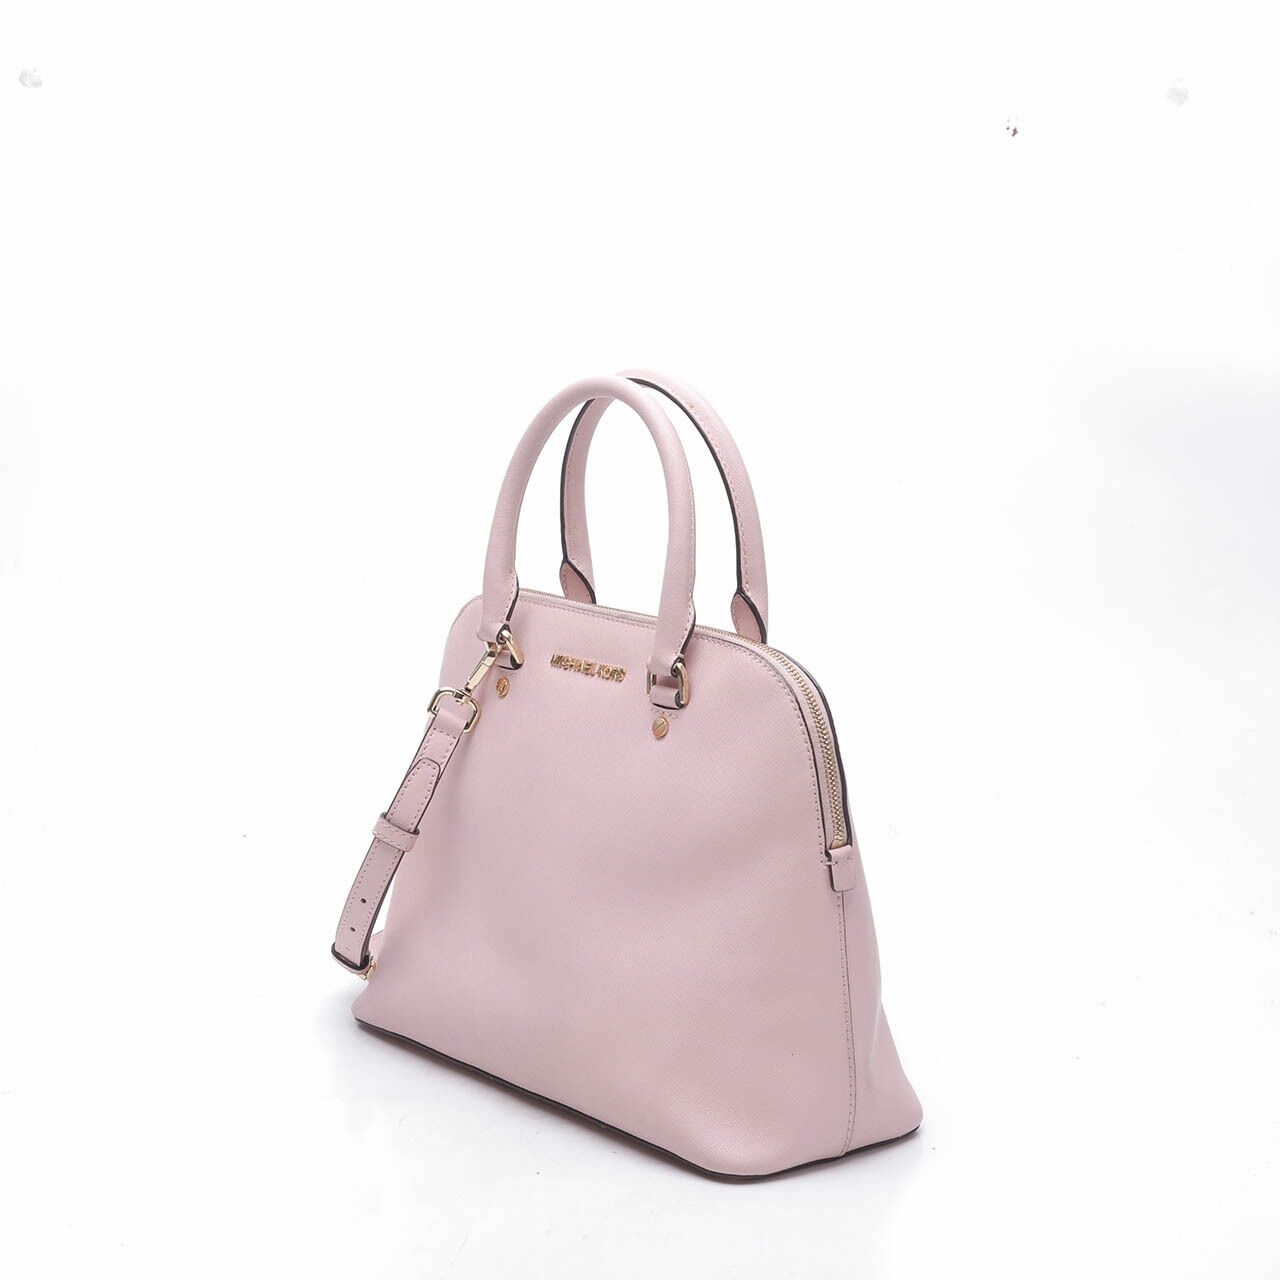 Michael Kors Cindy Saffiano Leather Pink Satchel Bag